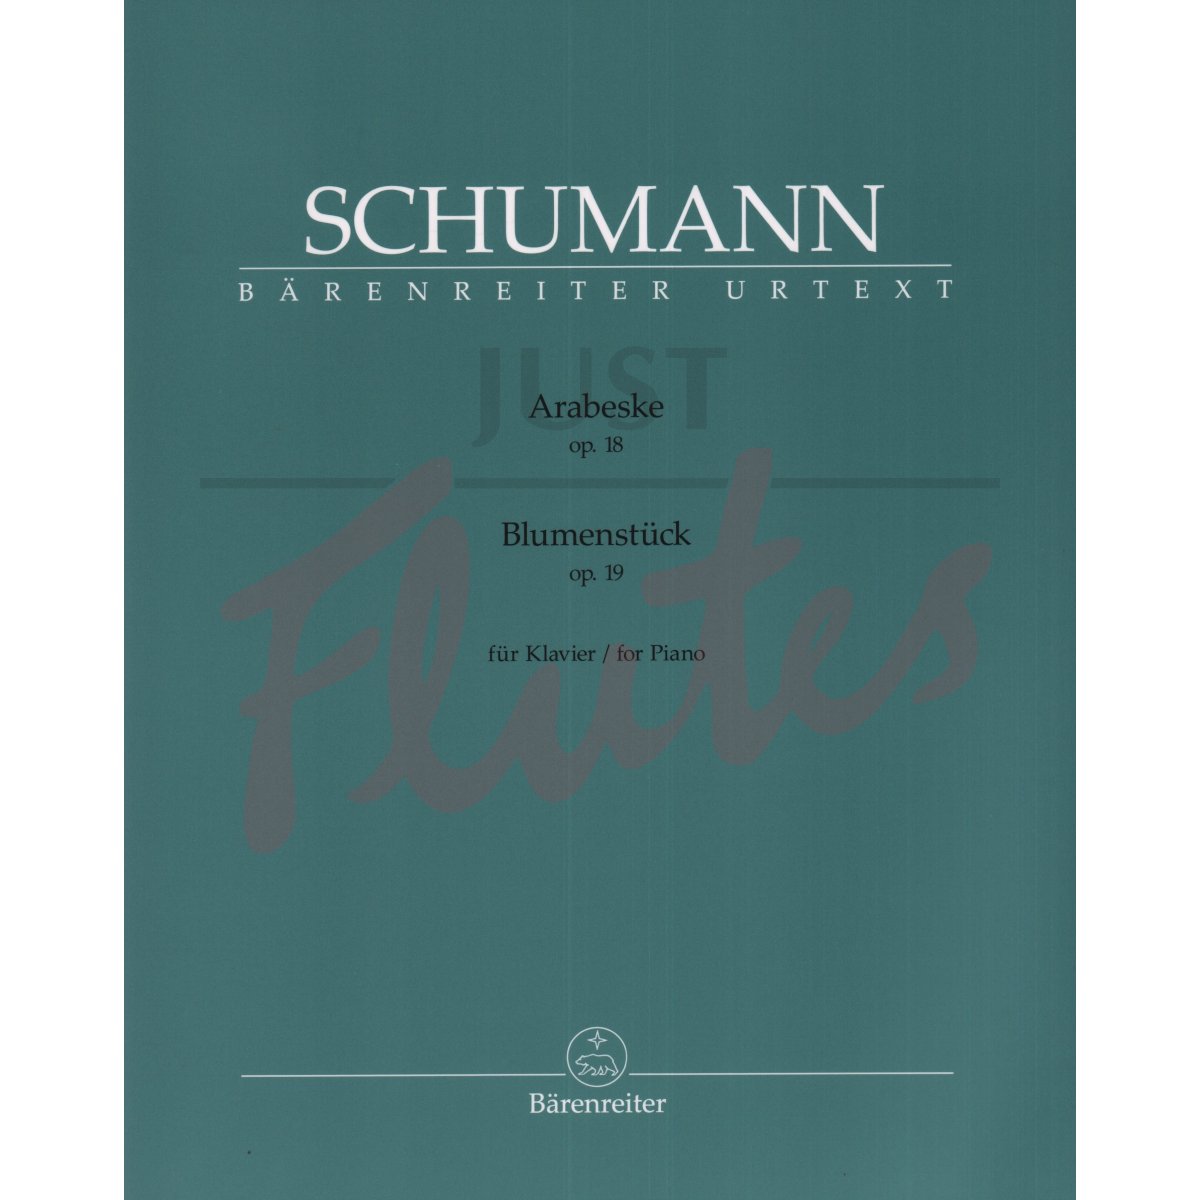 Arabeske Op. 18 and Blumenstuck Op. 19 for Piano - R. Schumann